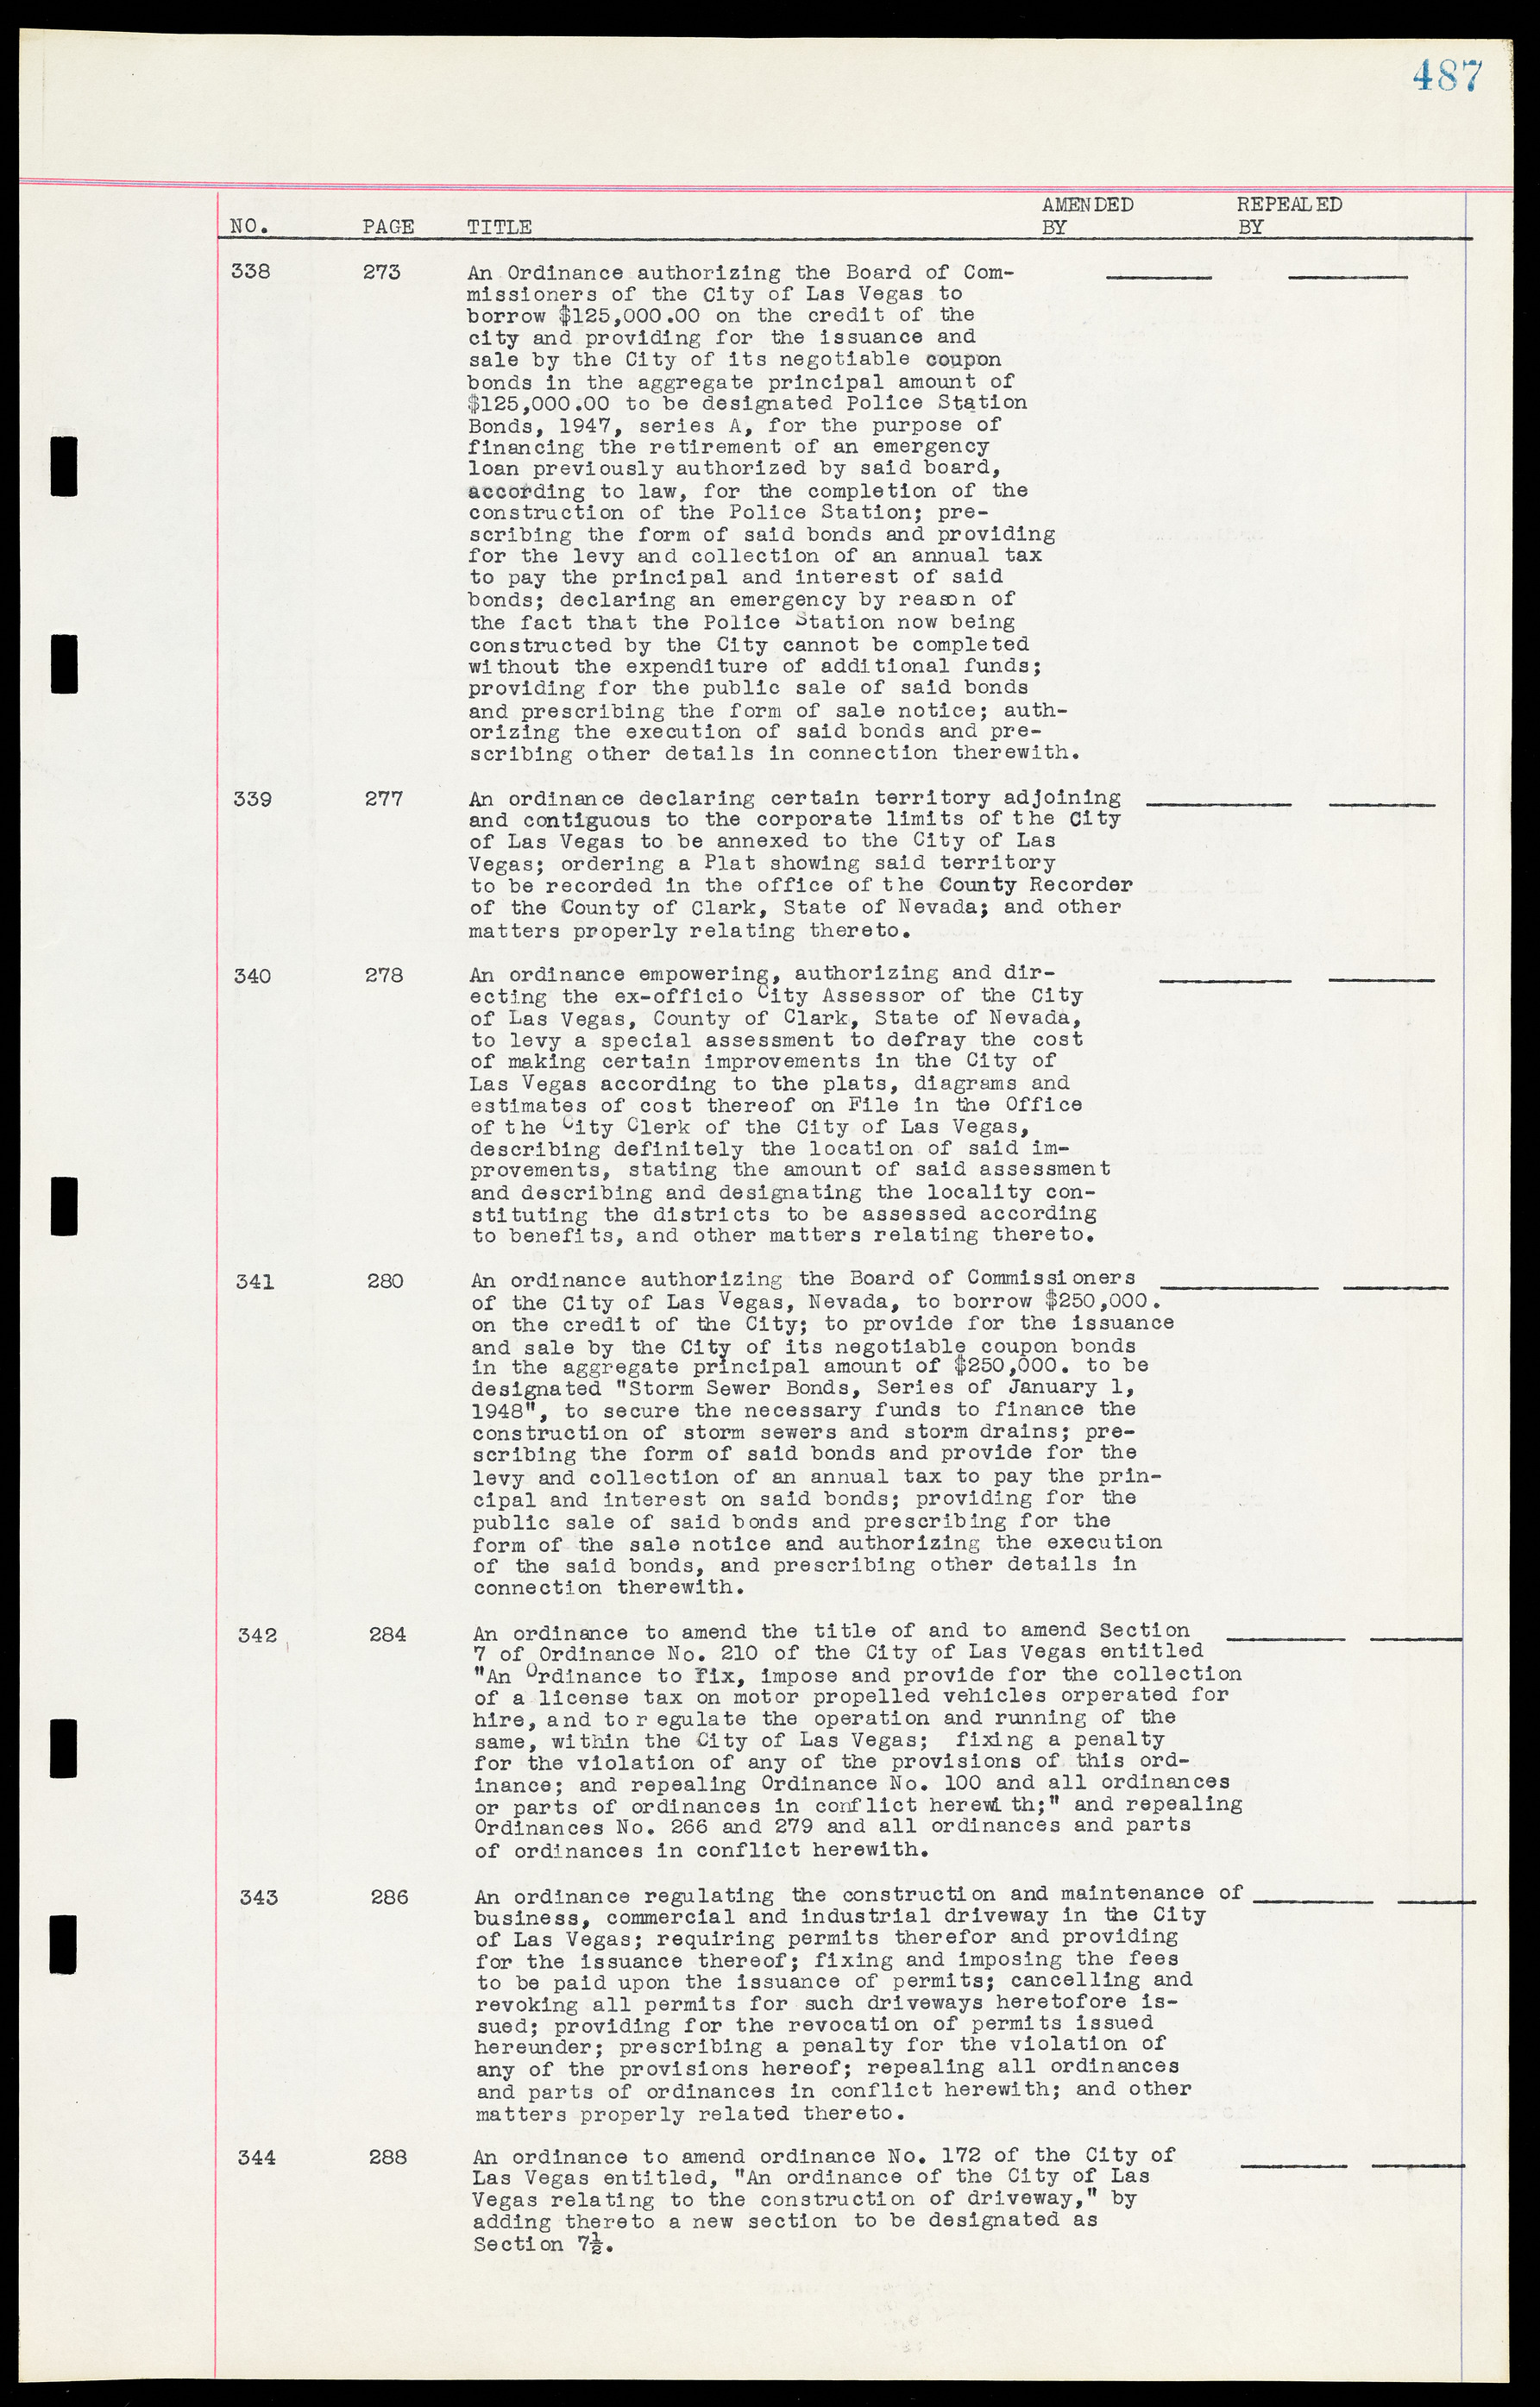 Las Vegas City Ordinances, March 31, 1933 to October 25, 1950, lvc000014-15